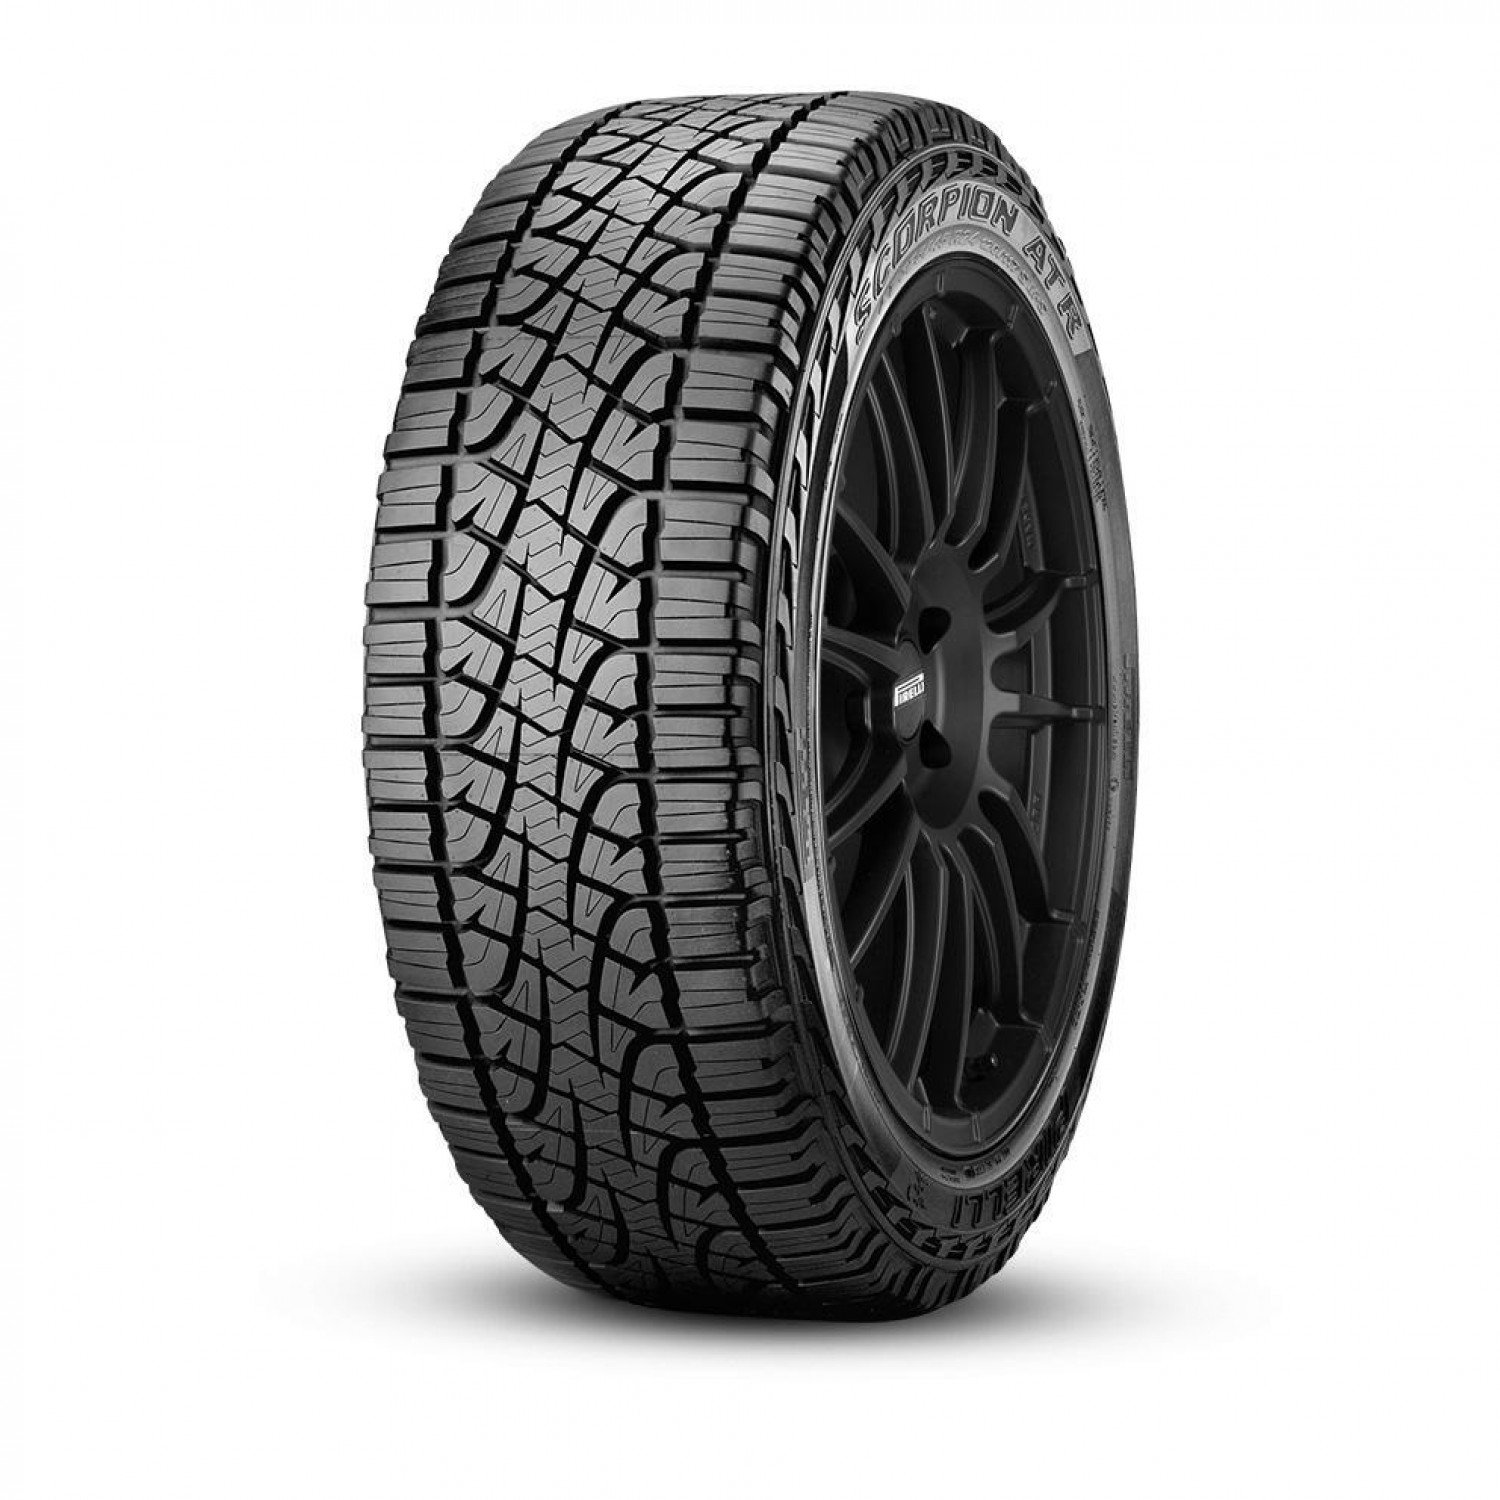 Pirelli Scorpion All Terrain (245/70R17 Reversable vzn121972 Outlined Sidewall White Tire Plus 110T) Letters/Black